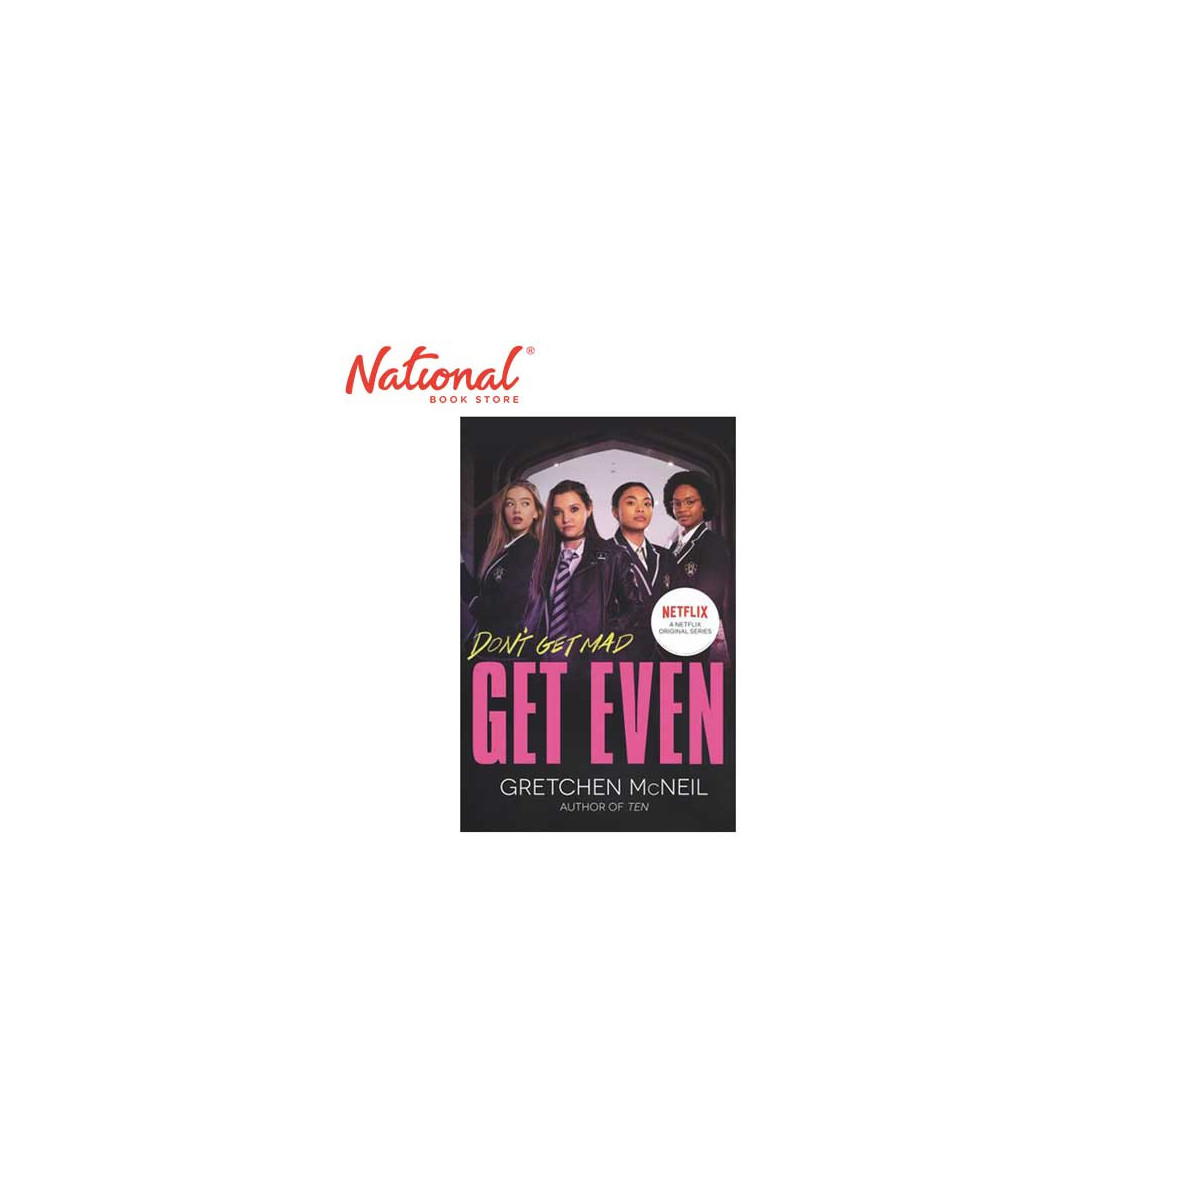 Get Even by Gretchen Mcneil - Trade Paperback - Teens Thriller - Mystery - Suspense